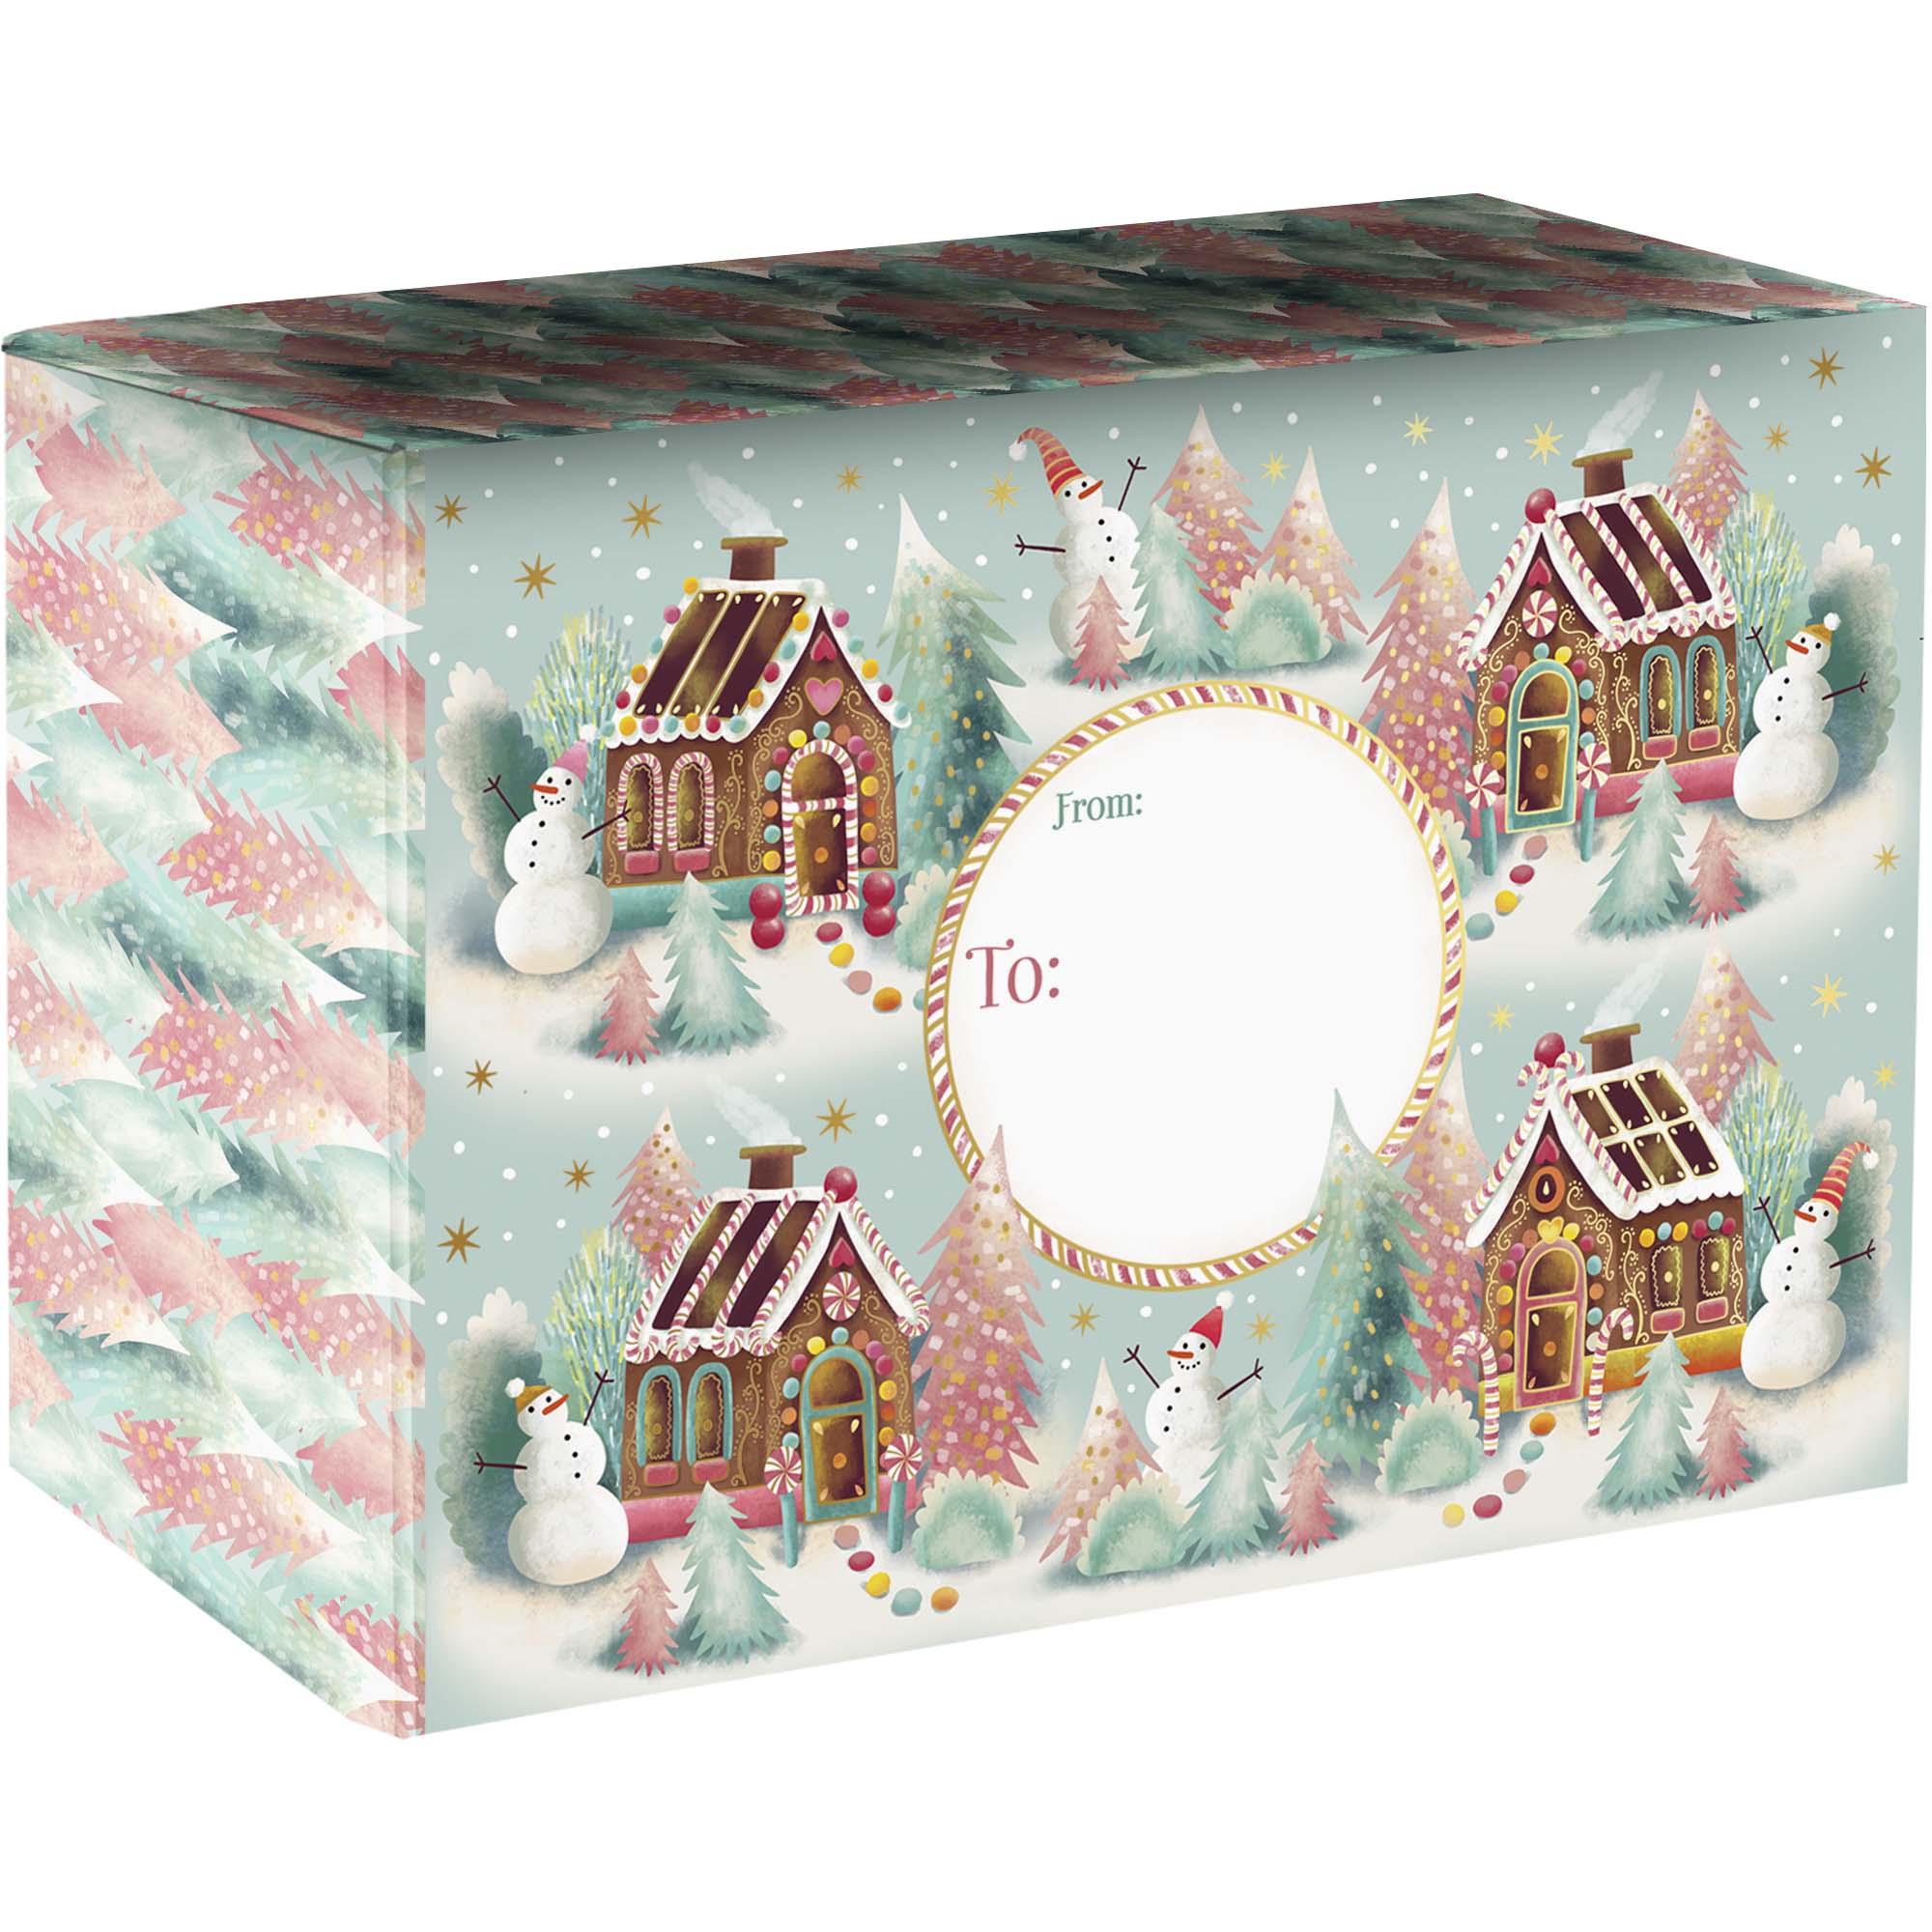 Gingerbread Dreams Medium Christmas Printed Gift Mailing Boxes